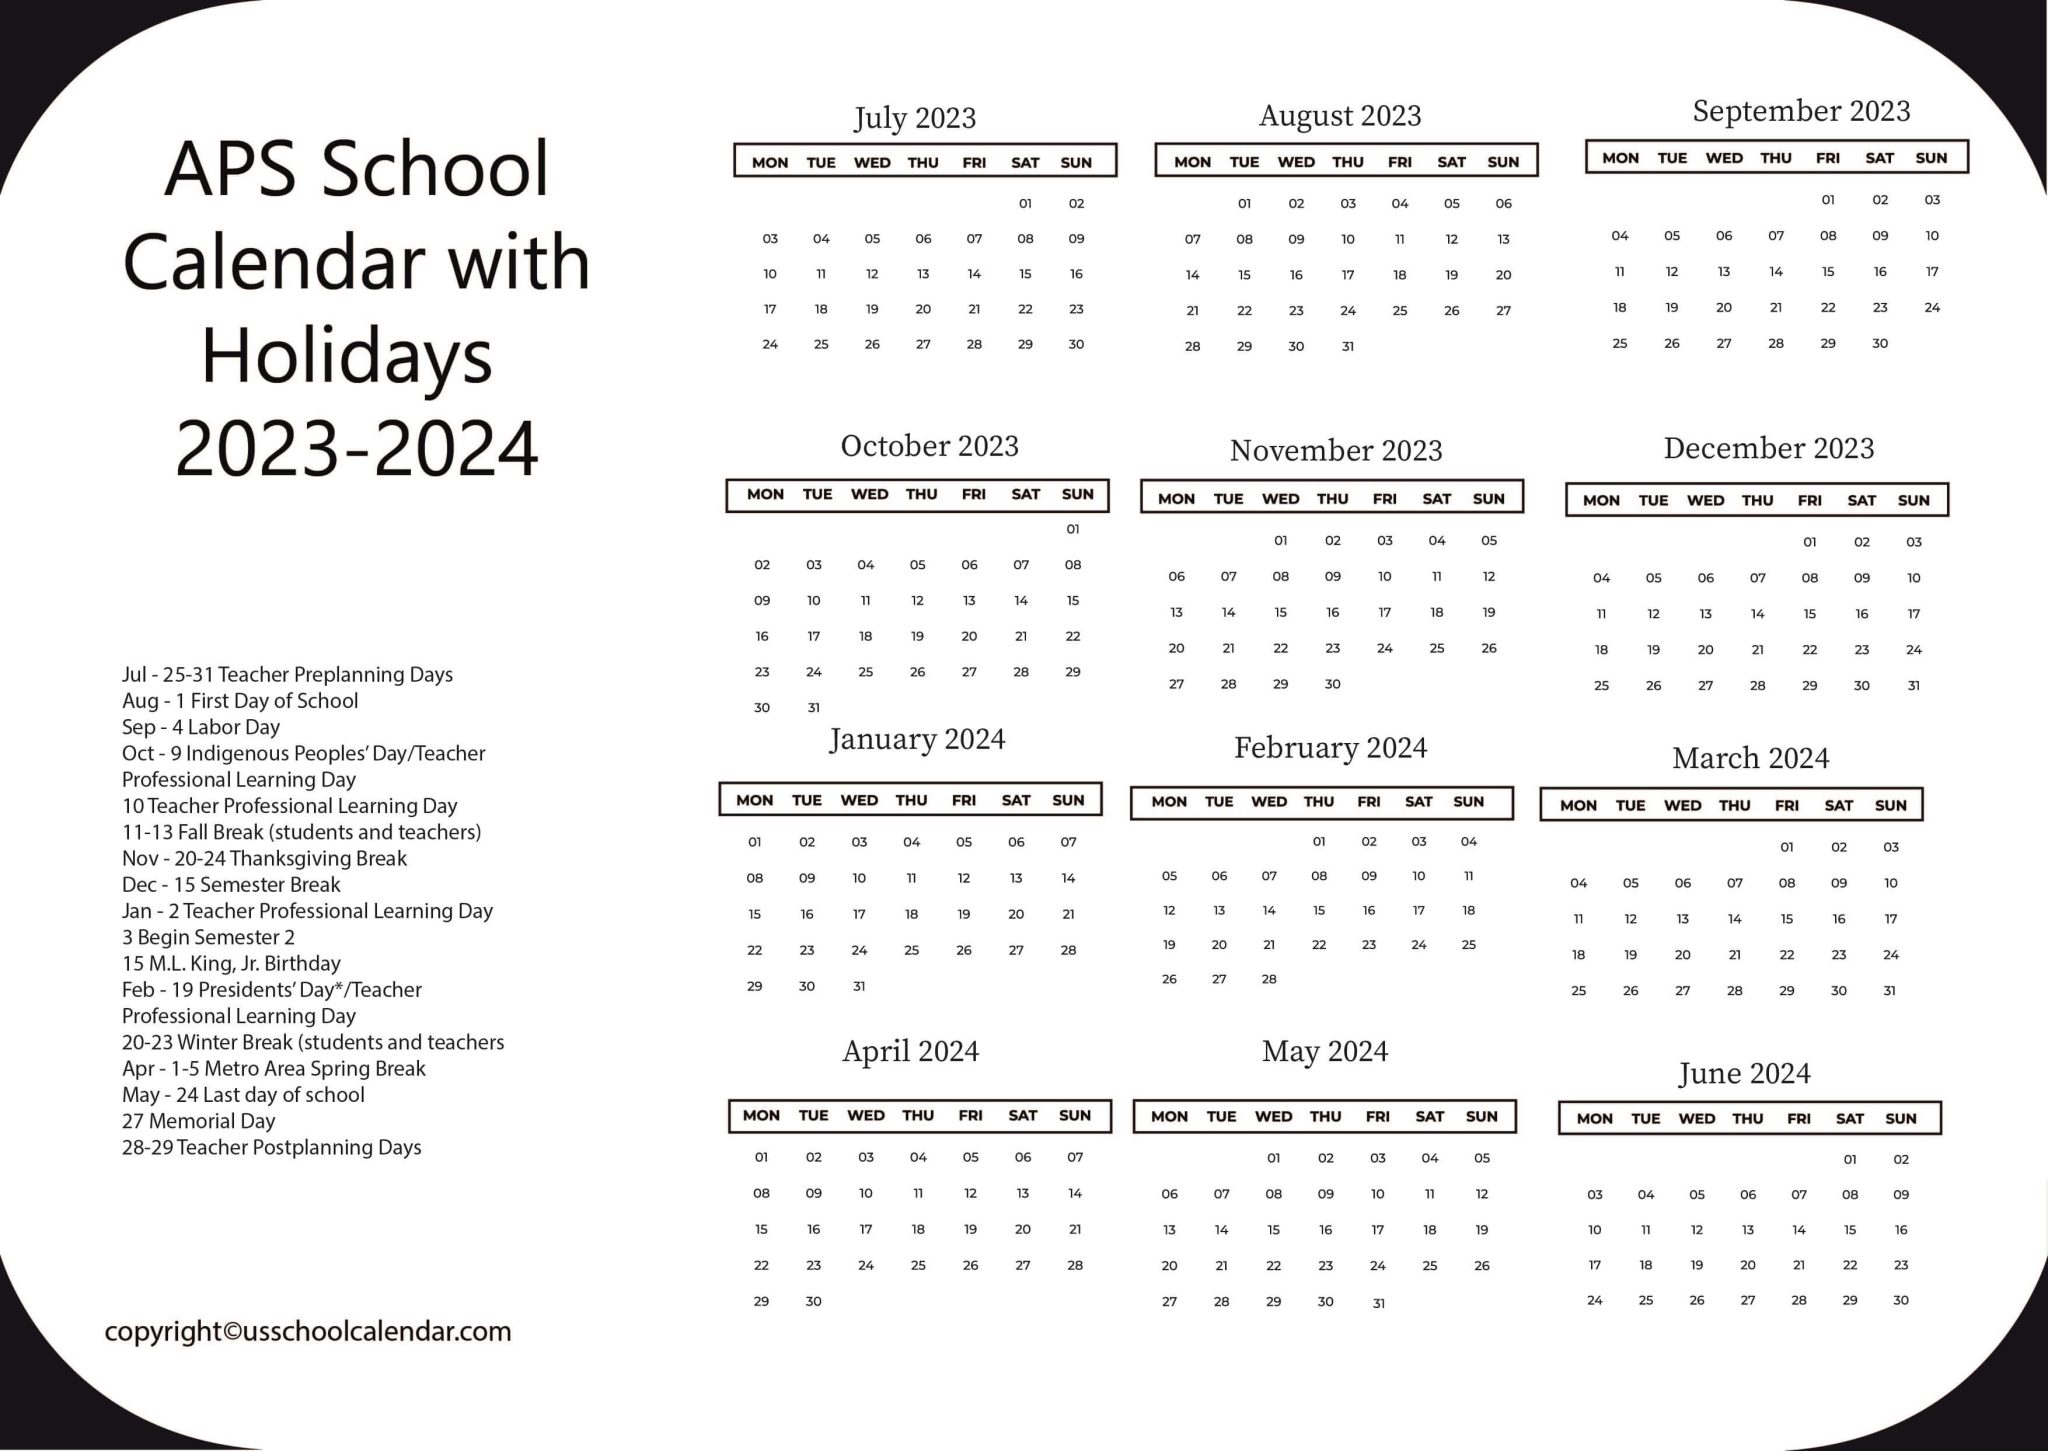 APS School Calendar with Holidays 2023 2024